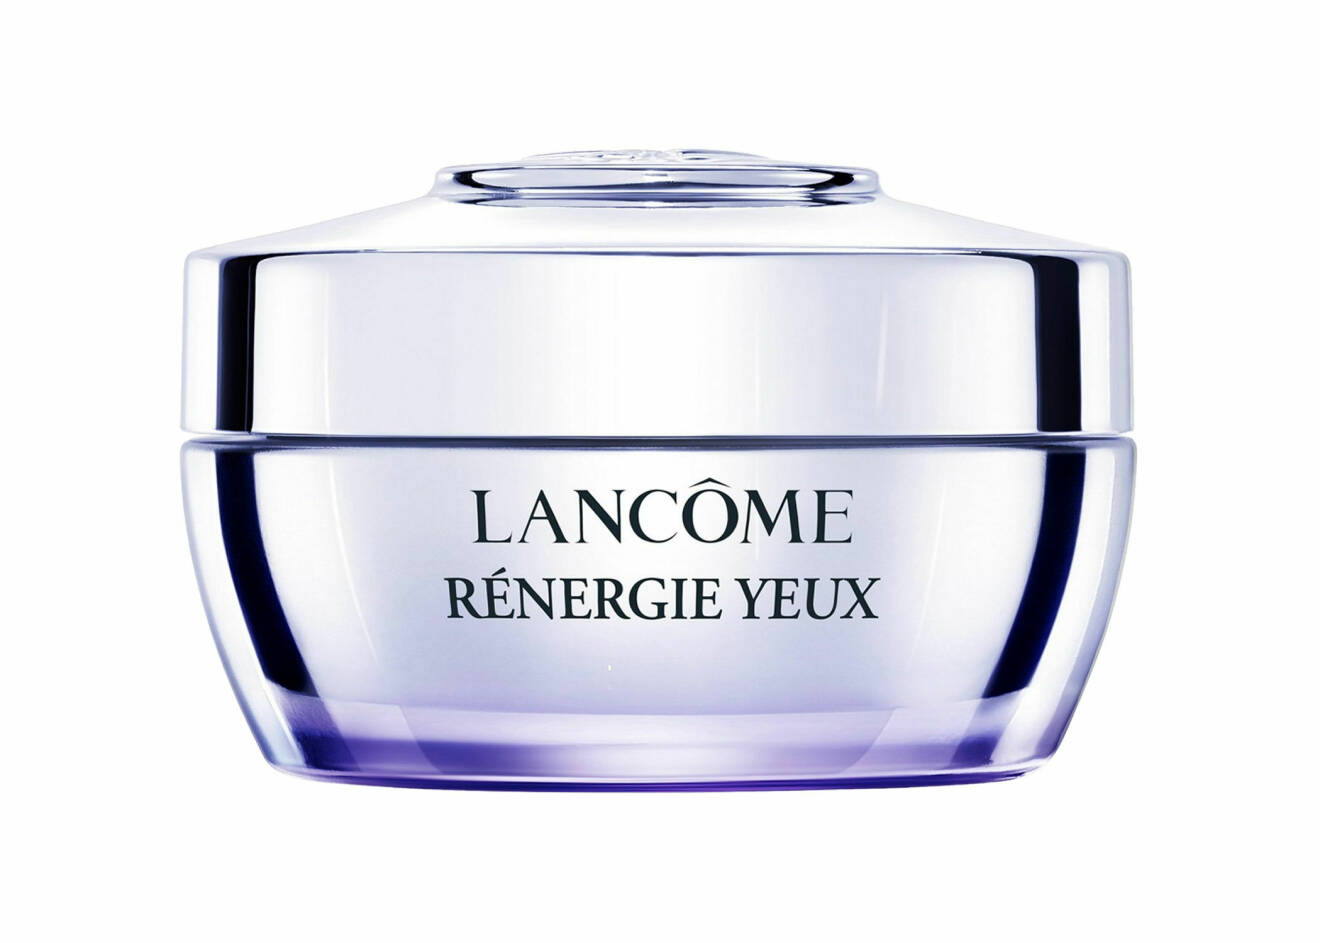 Rénergie Yeux från Lancôme.